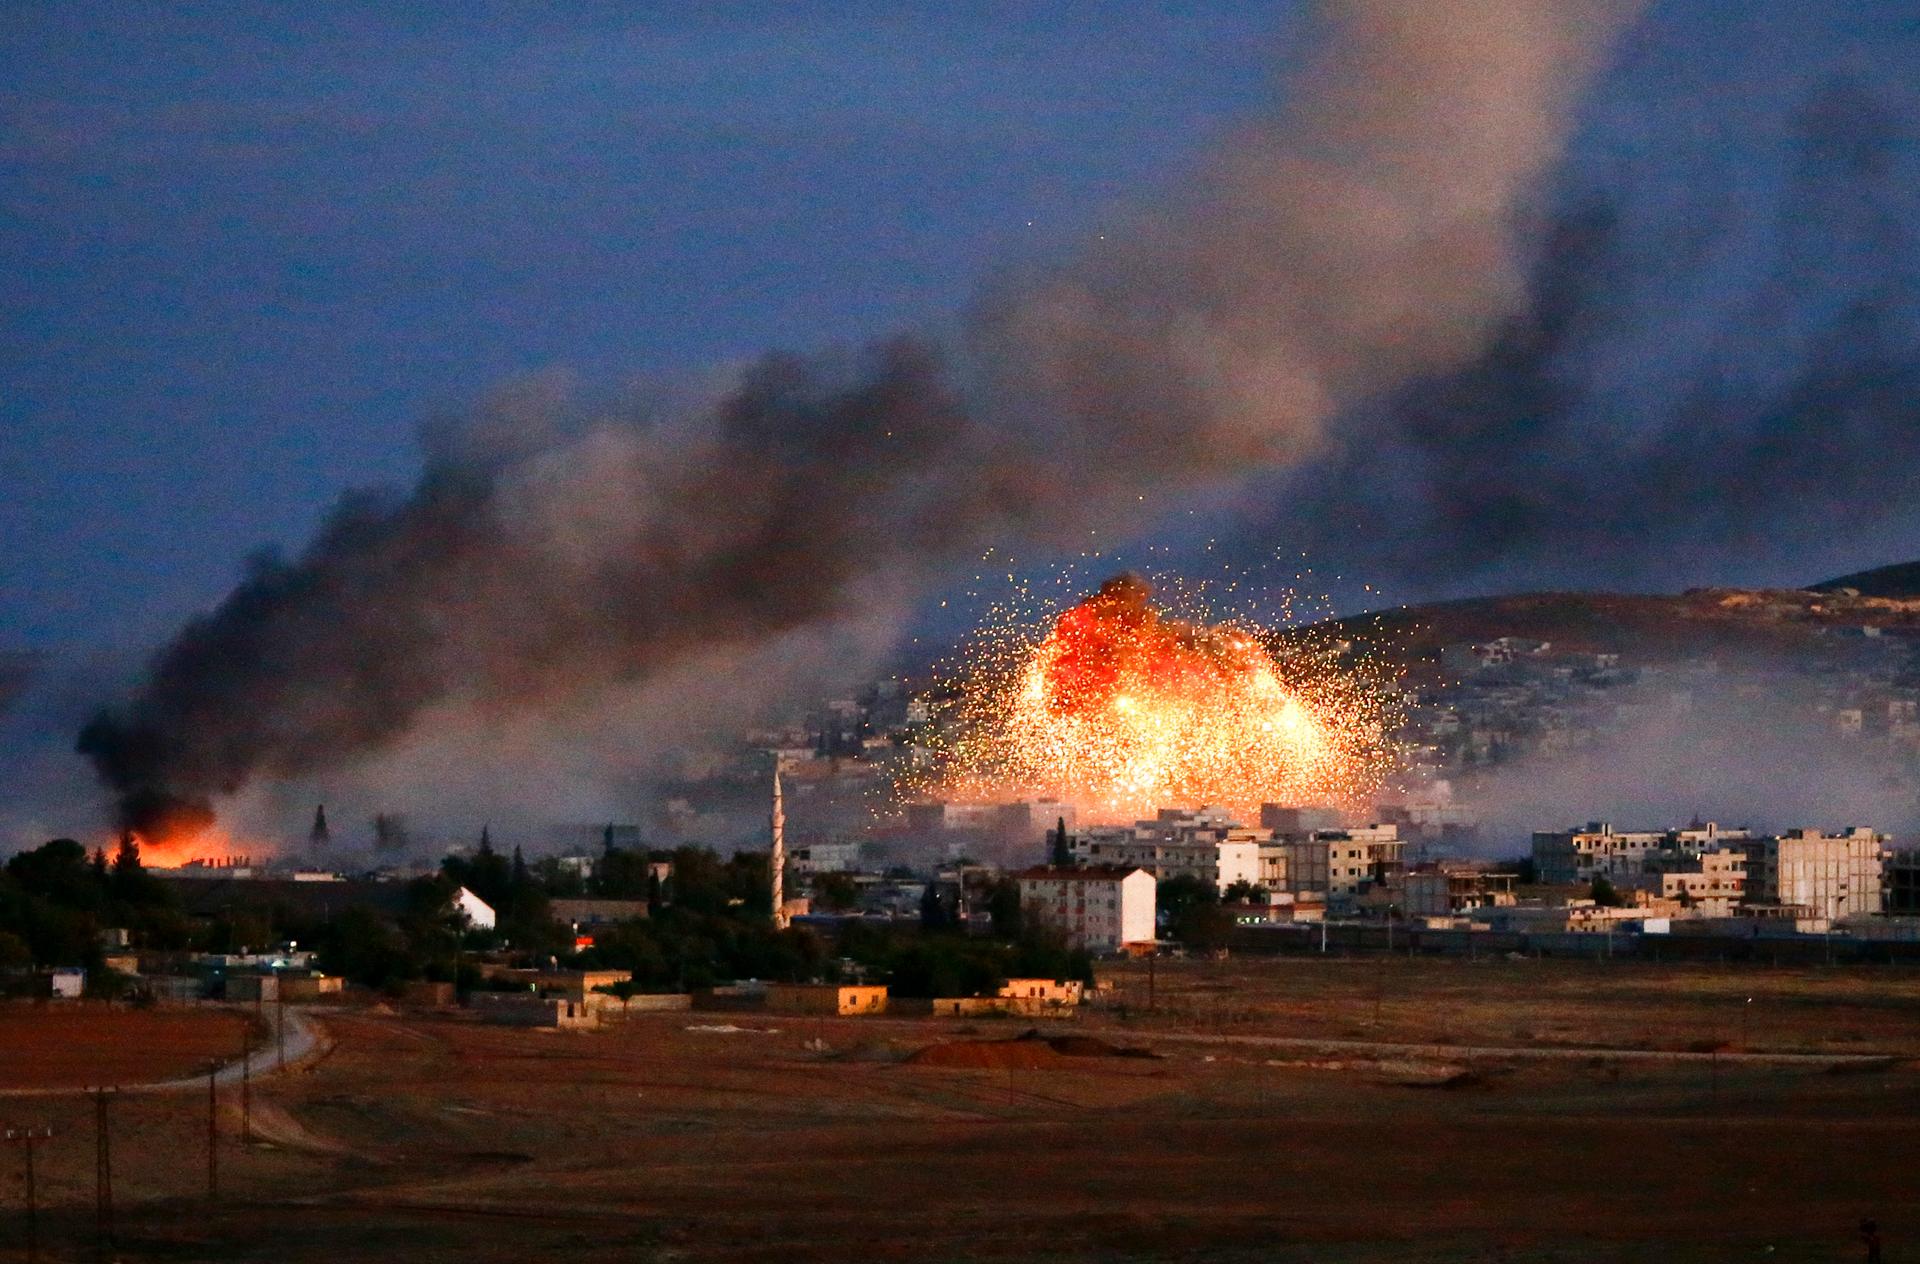 The fight in Kobane